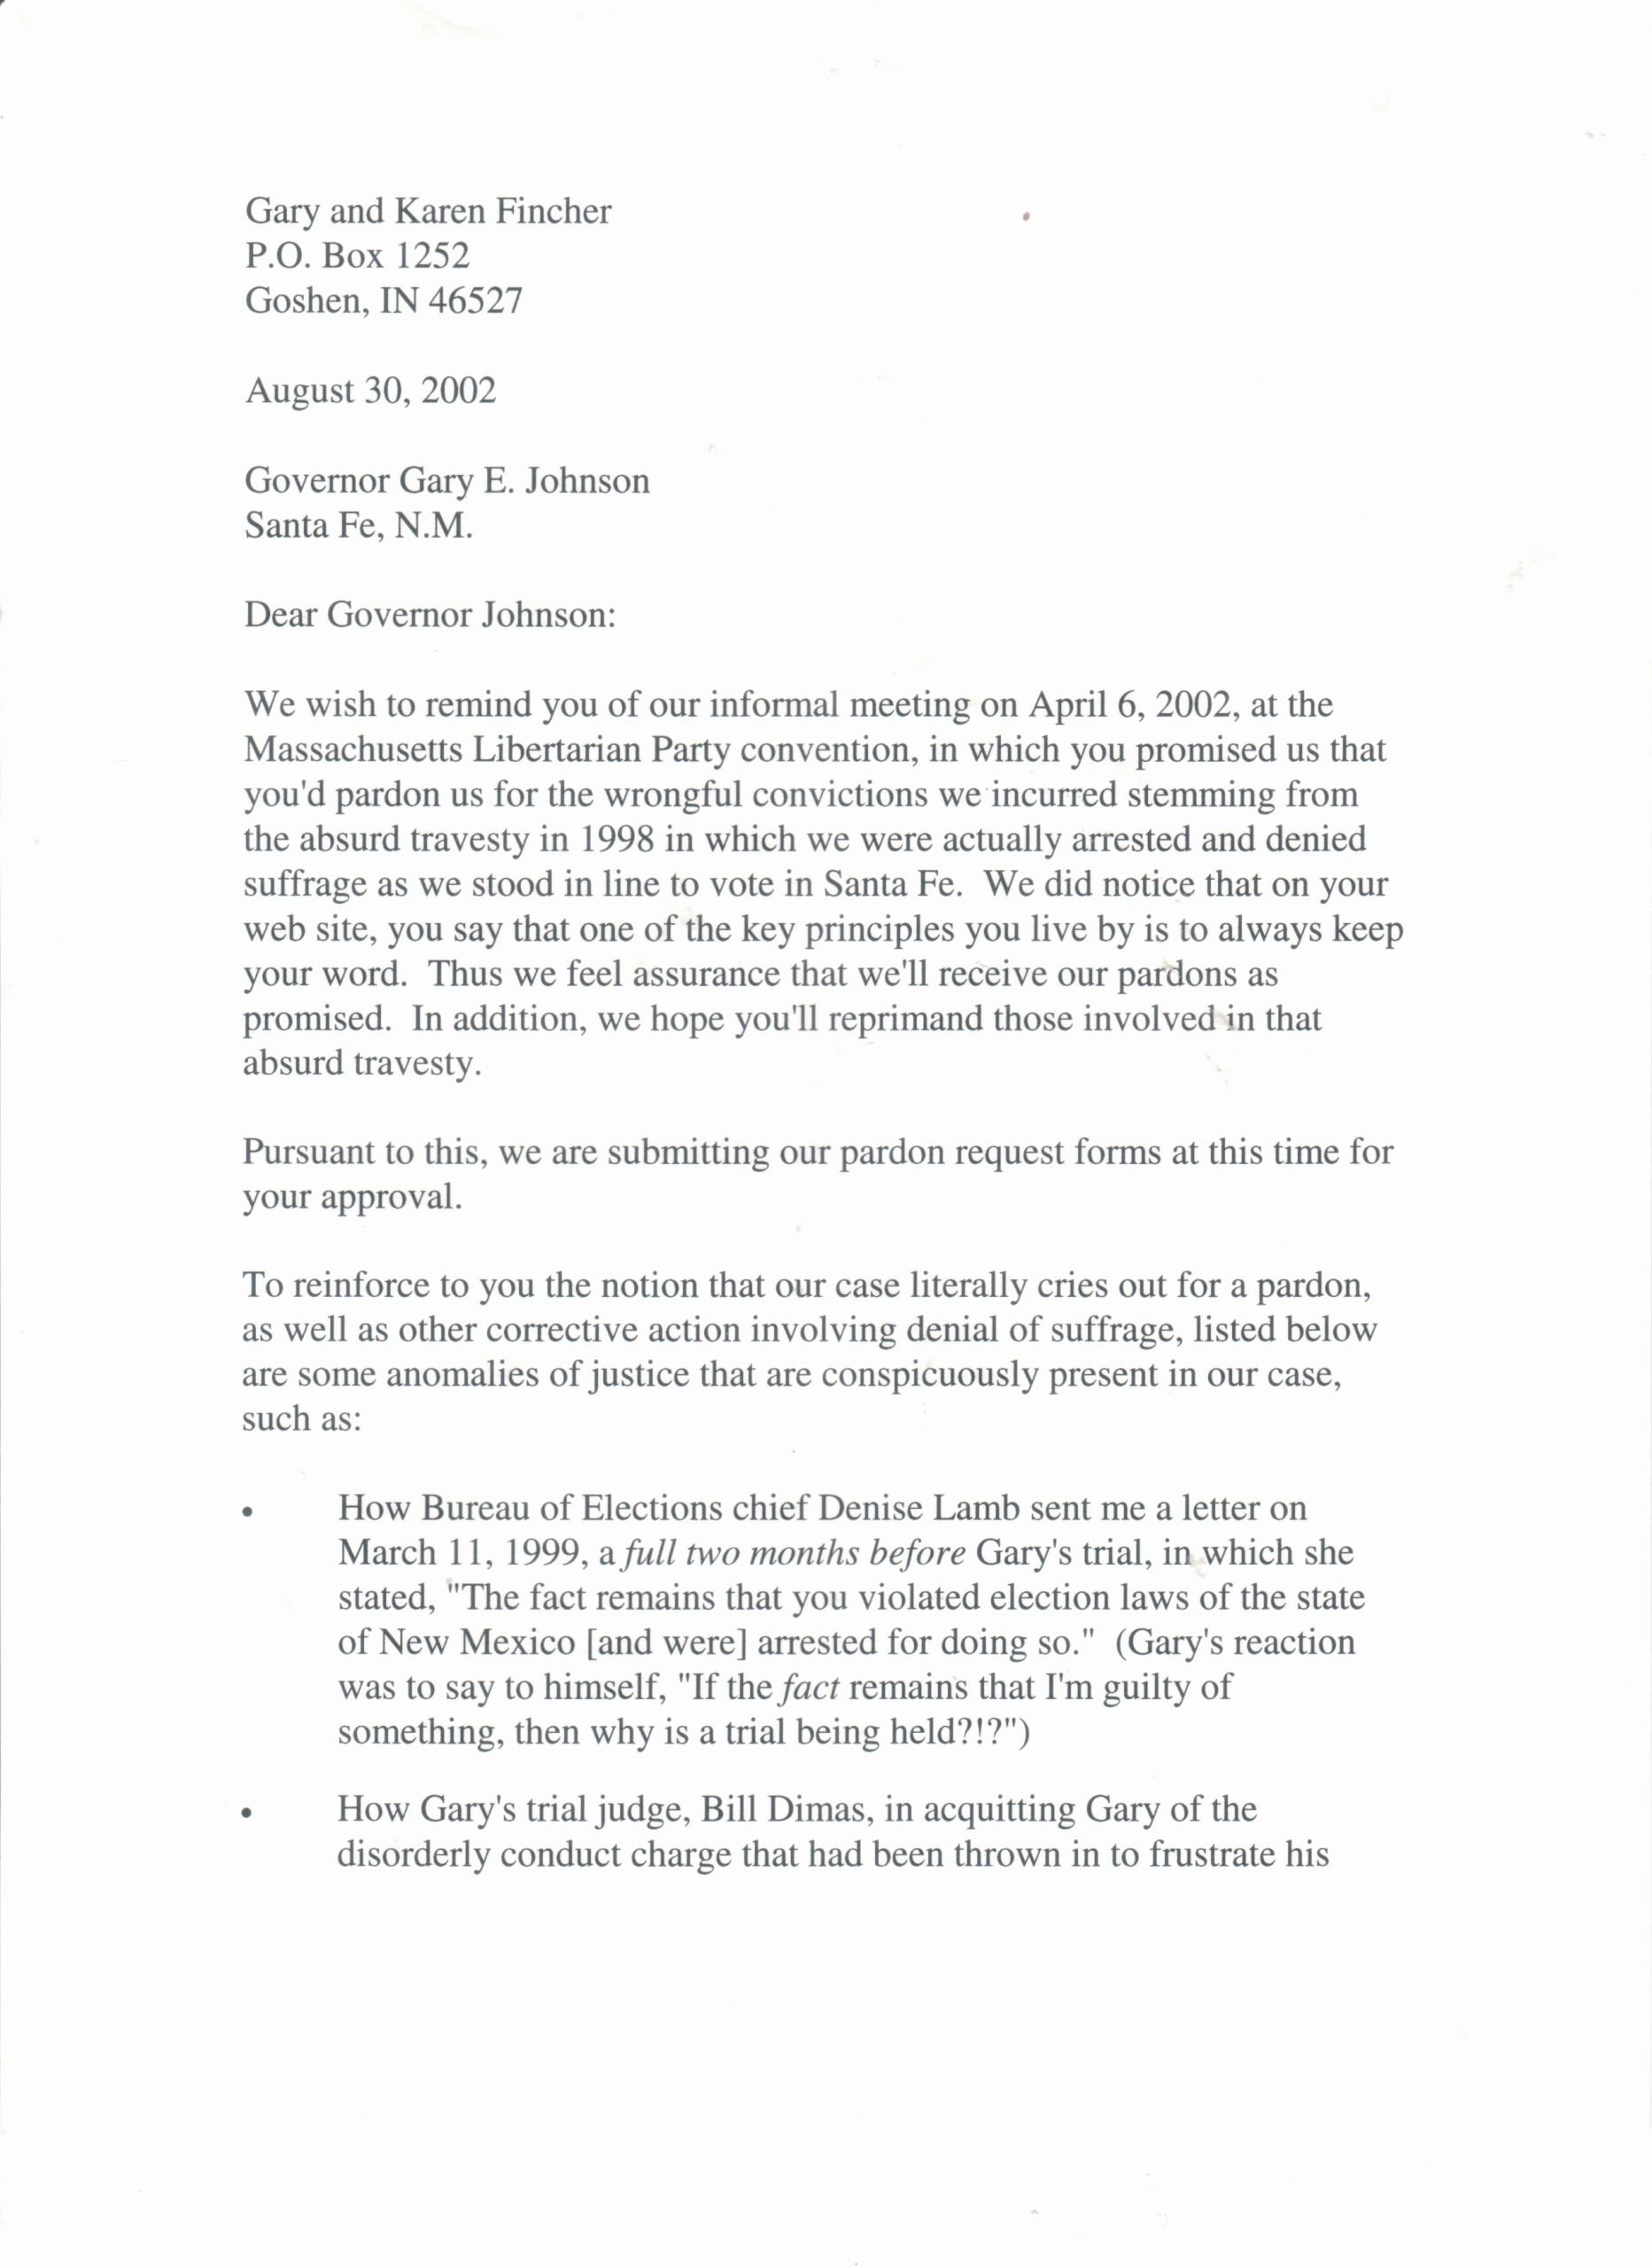 Sample Pardon Letters Elegant Gop Presidential Hopeful Gary Johnson A Core Trust issue